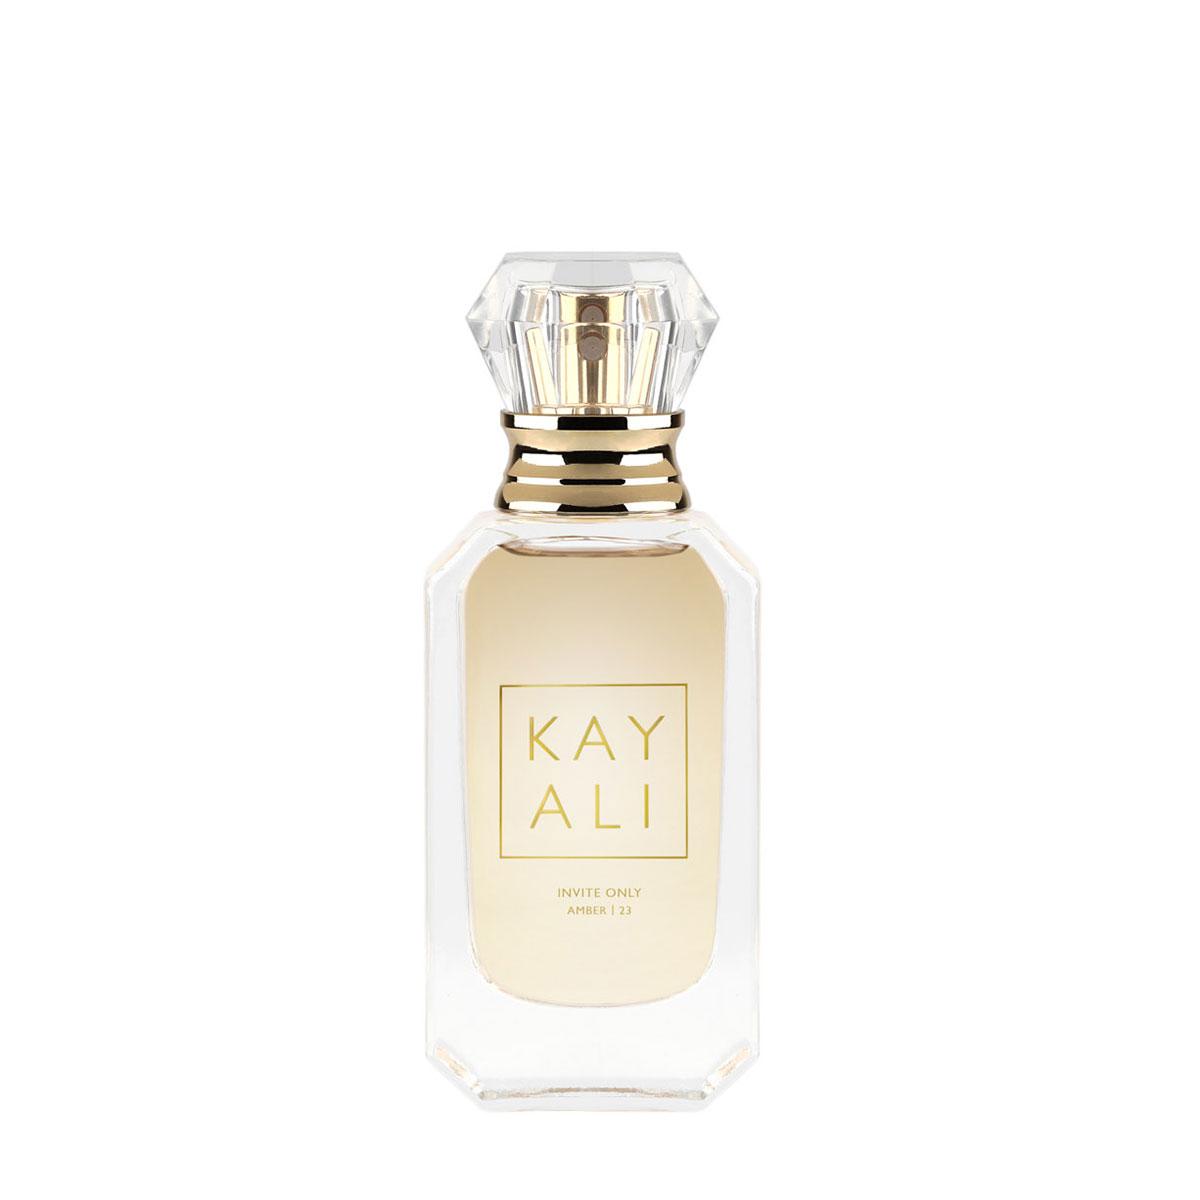 Kayali Invite Only Amber | 23 Eau de Parfum Intense 10ml | SEPHORA UK